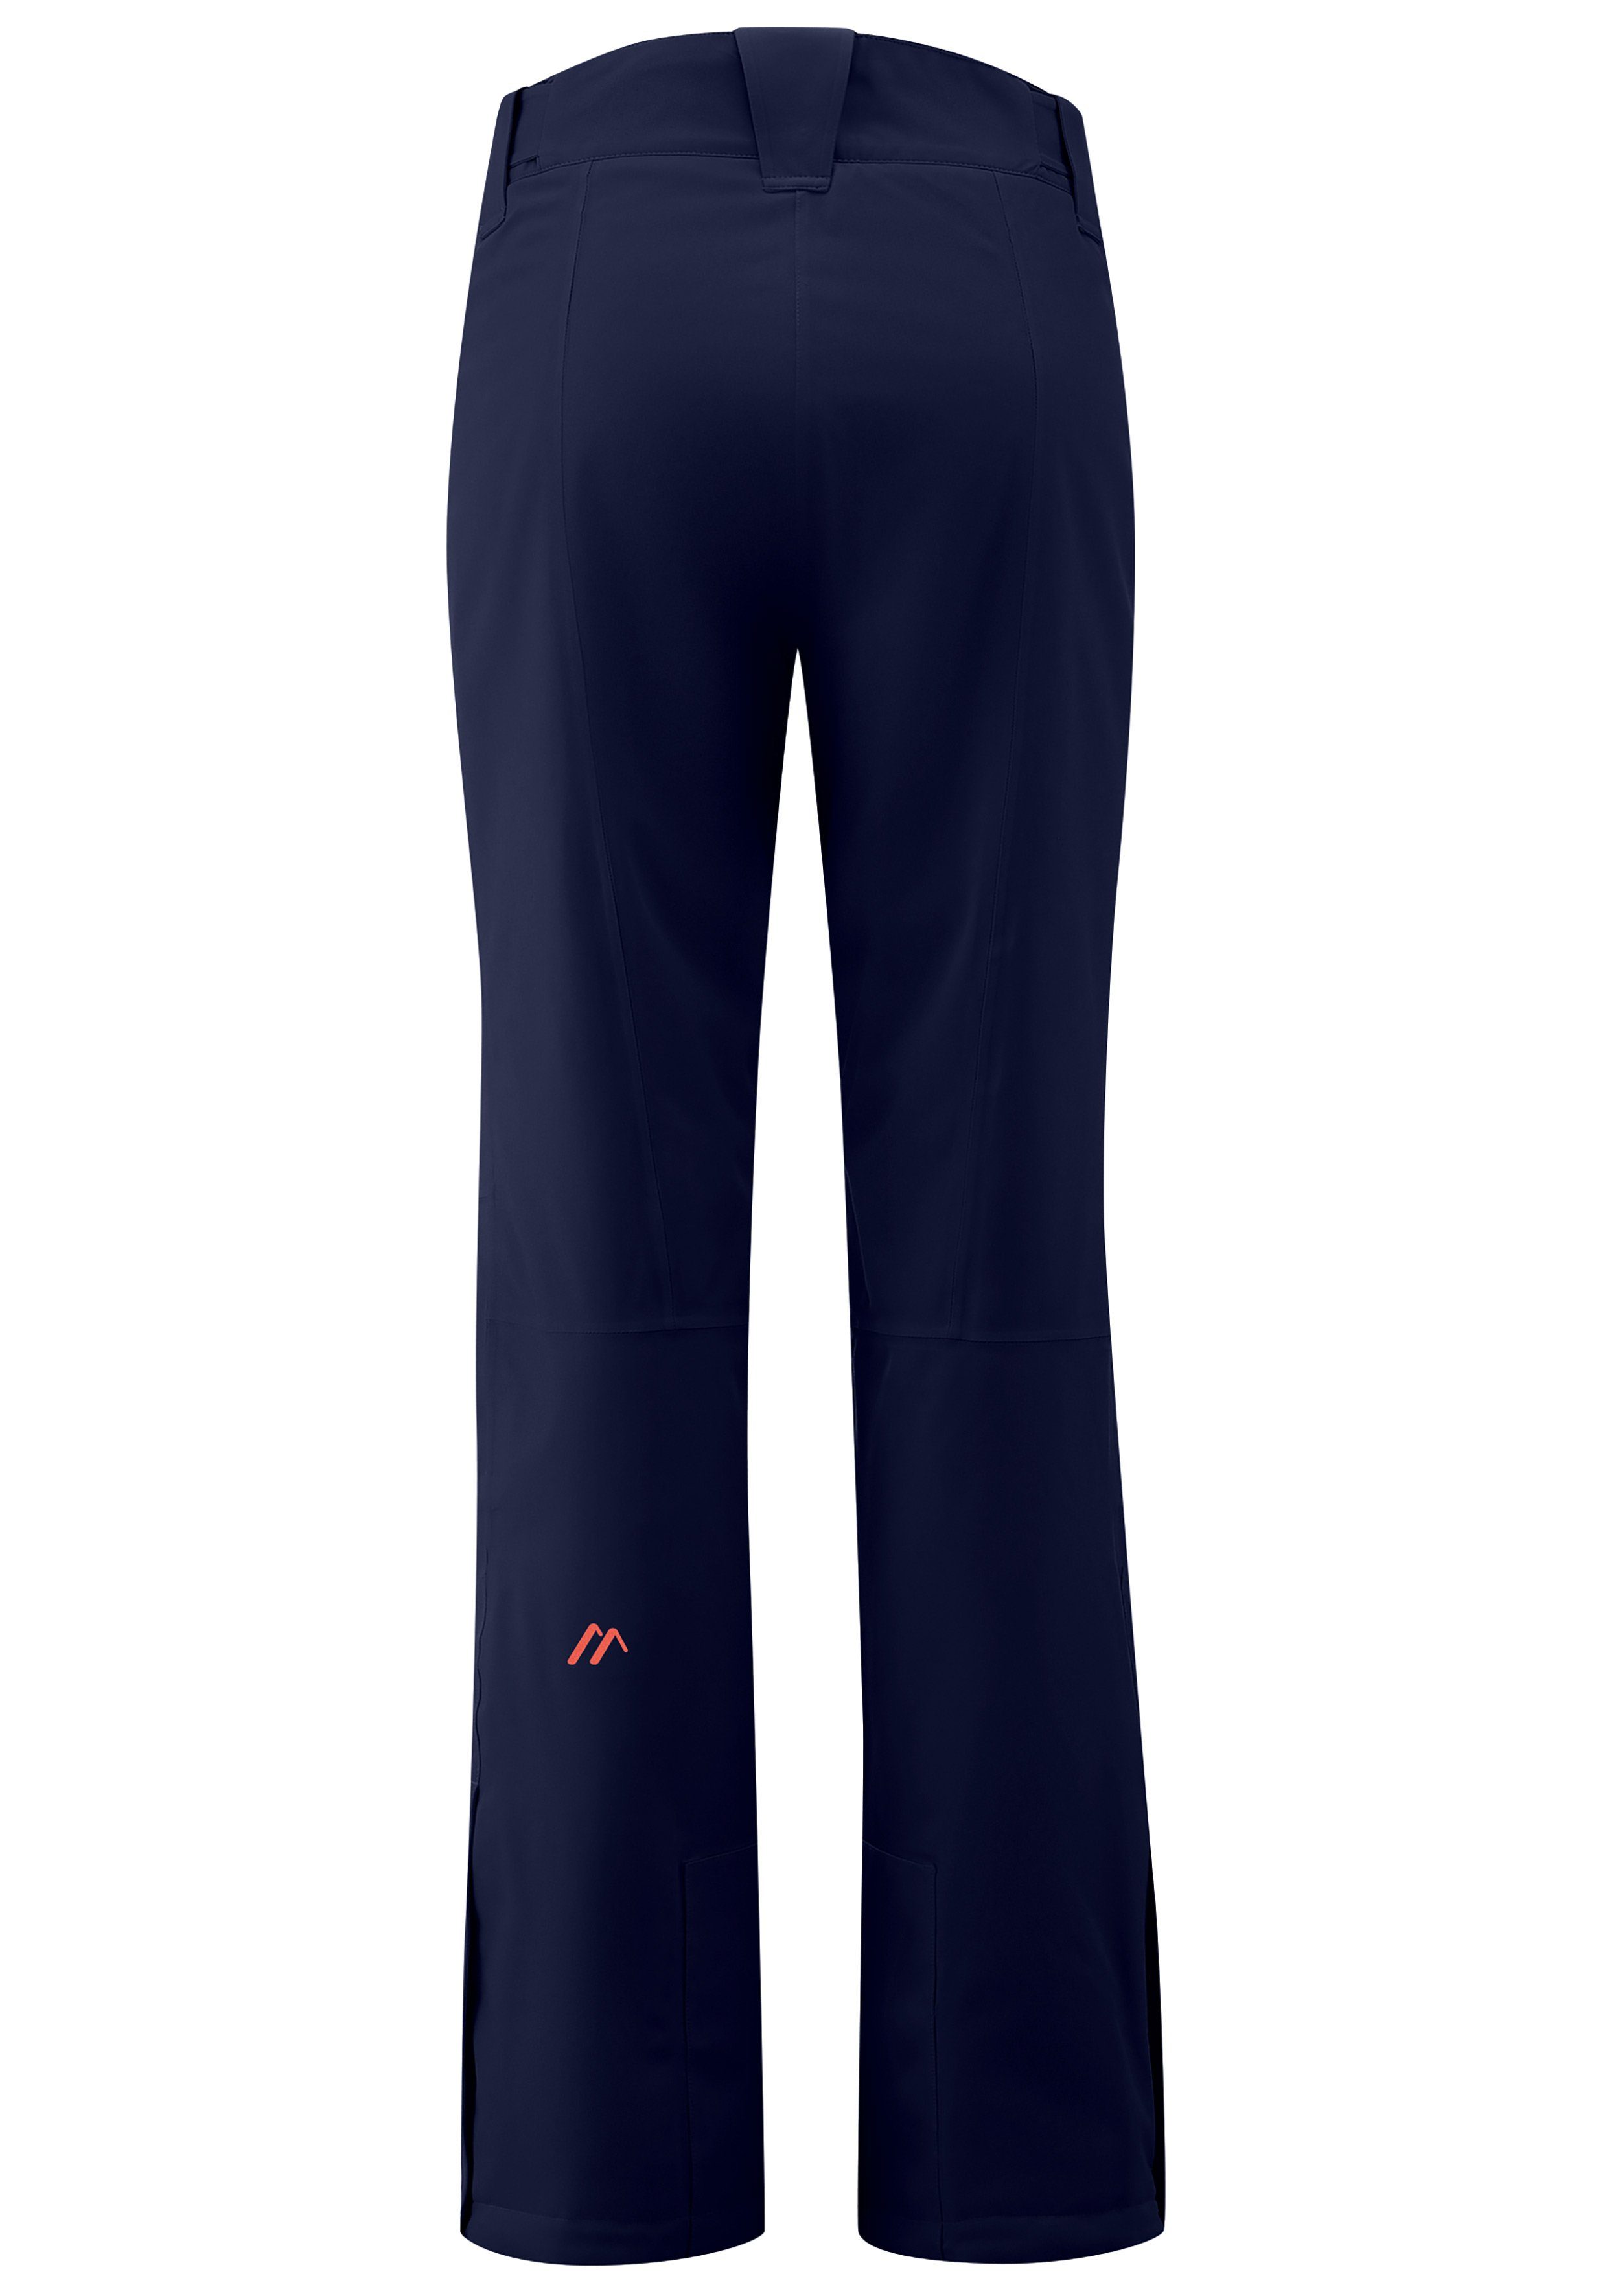 Skihose Sports Maier Coral in Pants dunkelblau schlanker Skihose sportliche Feminin, Silhouette